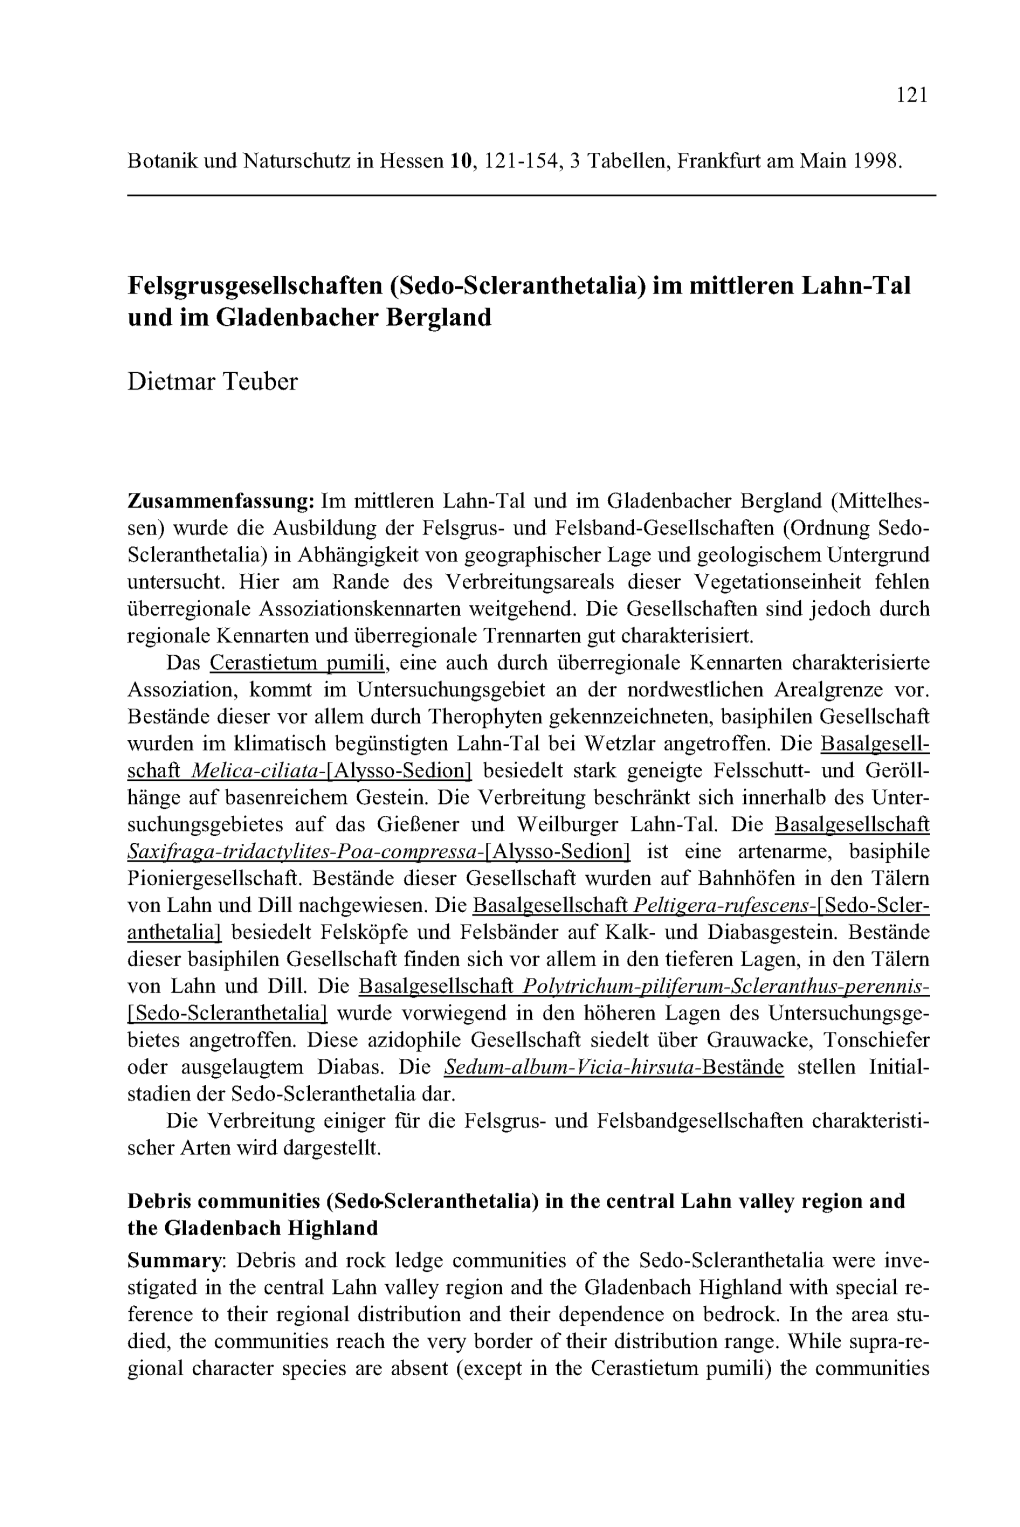 Felsgrusgesellschaften (Sedo-Scleranthetalia) Im Mittleren Lahn-Tal Und Im Gladenbacher Bergland